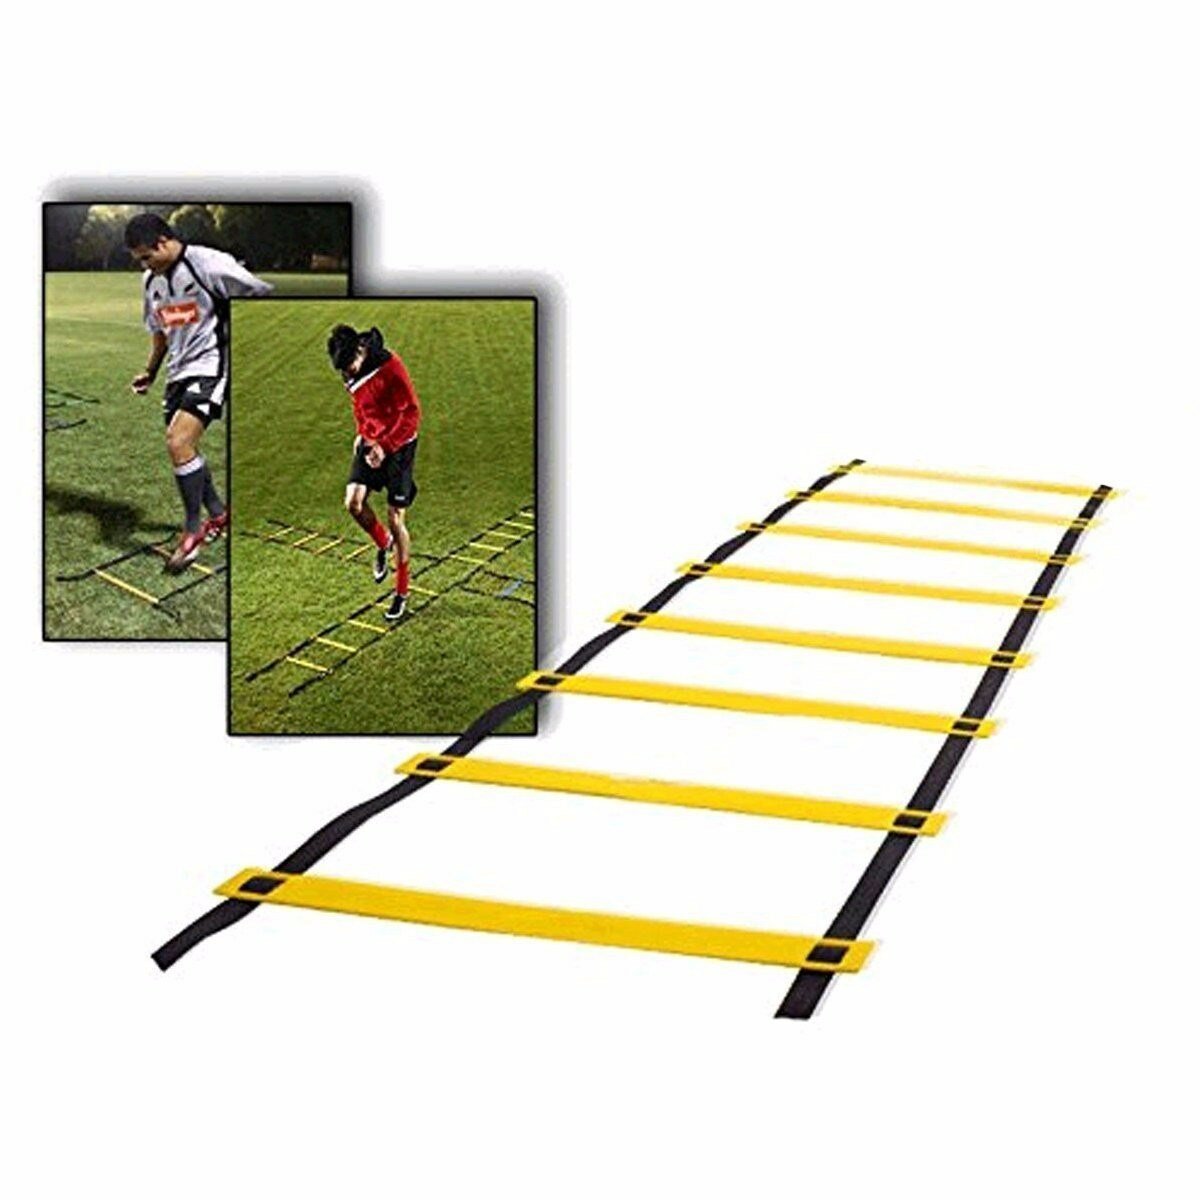 CAMTOA 4m 8-Rung Training Ladder Soccer Basketball Speed Training Ladder Outdoor Indoor Sports Training Equipment